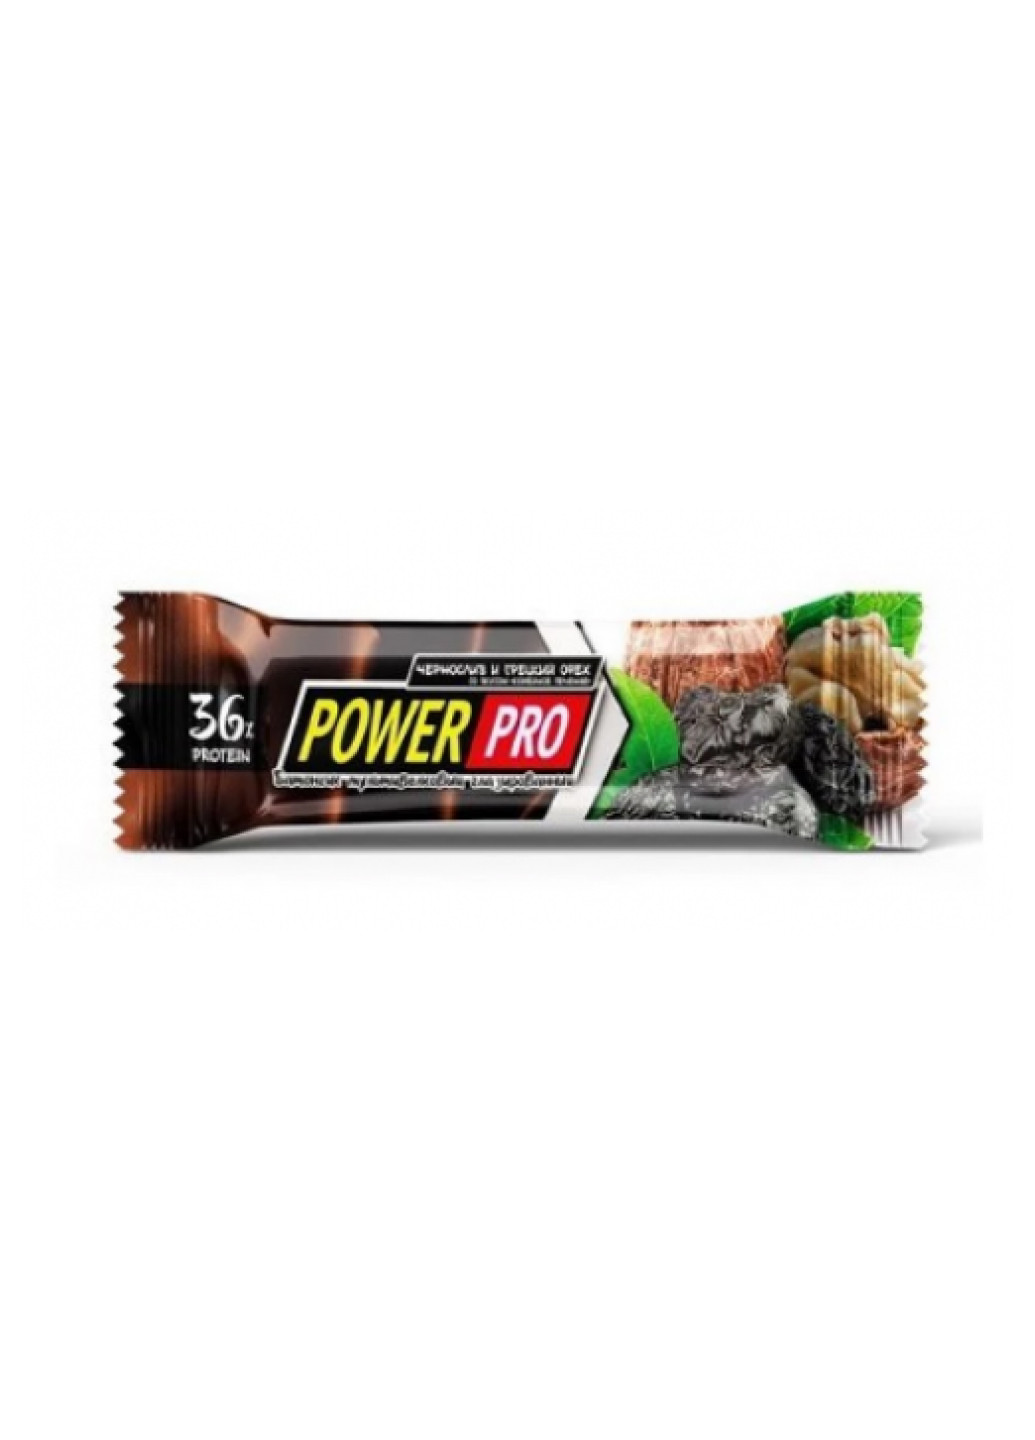 Батончики для энергии Protein Bar Nutella 36% Орехи - 20x60g Nut(фундук и арахис) Power Pro (253153425)